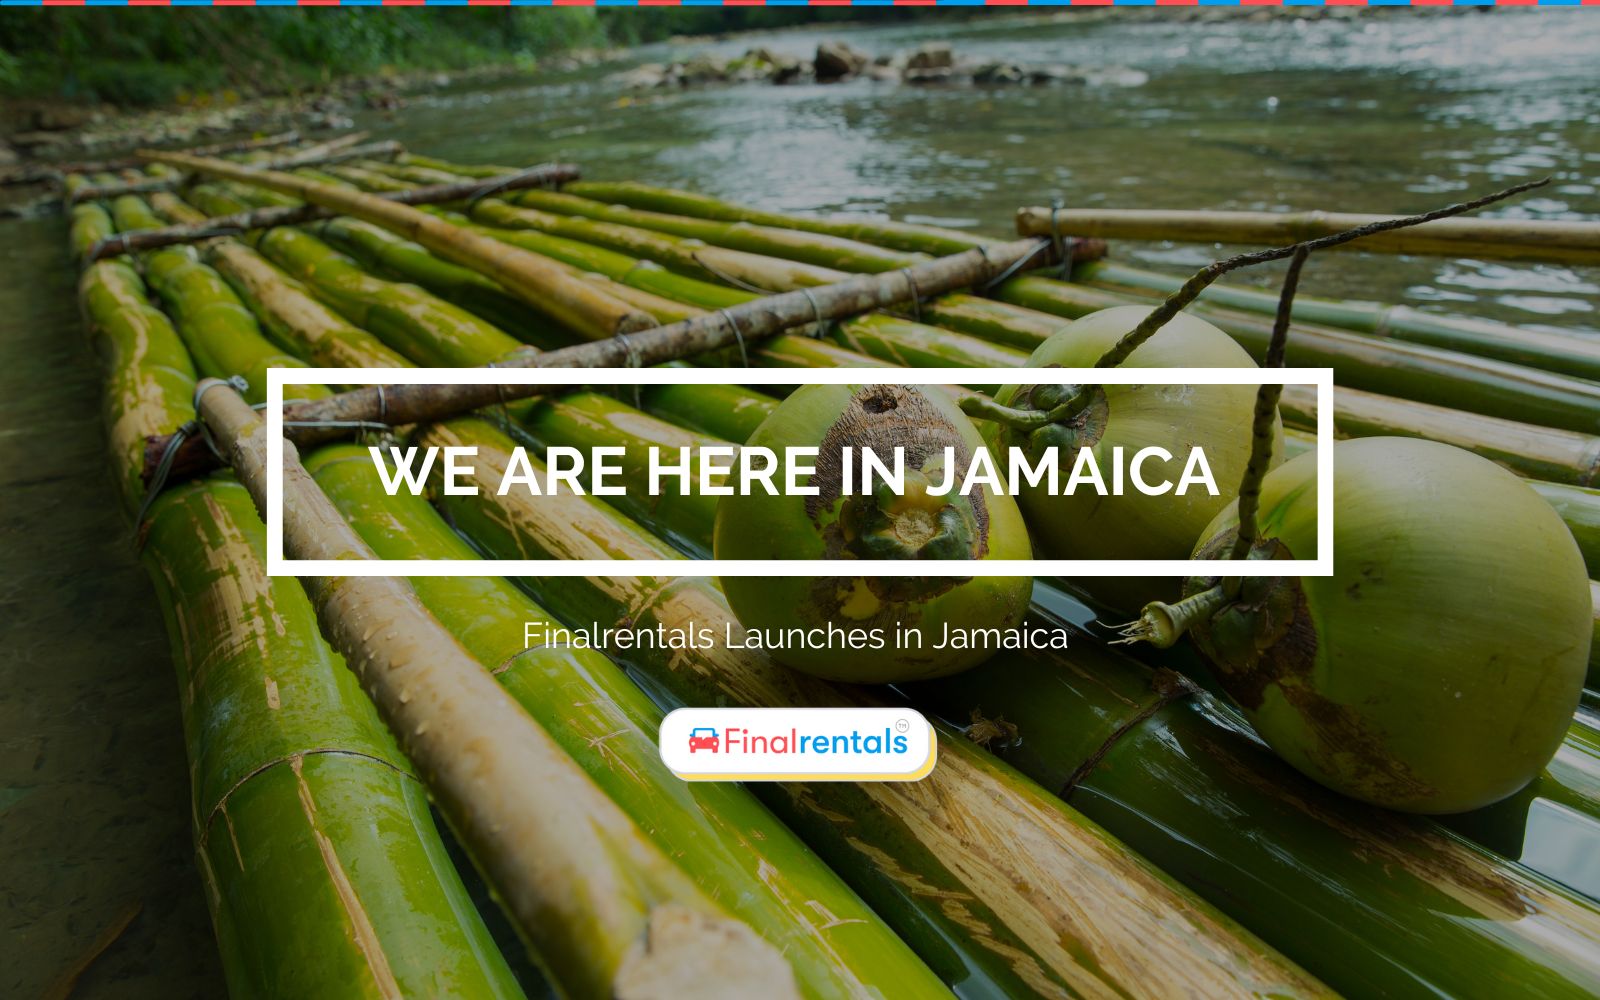 Finalrentals Launches in Jamaica